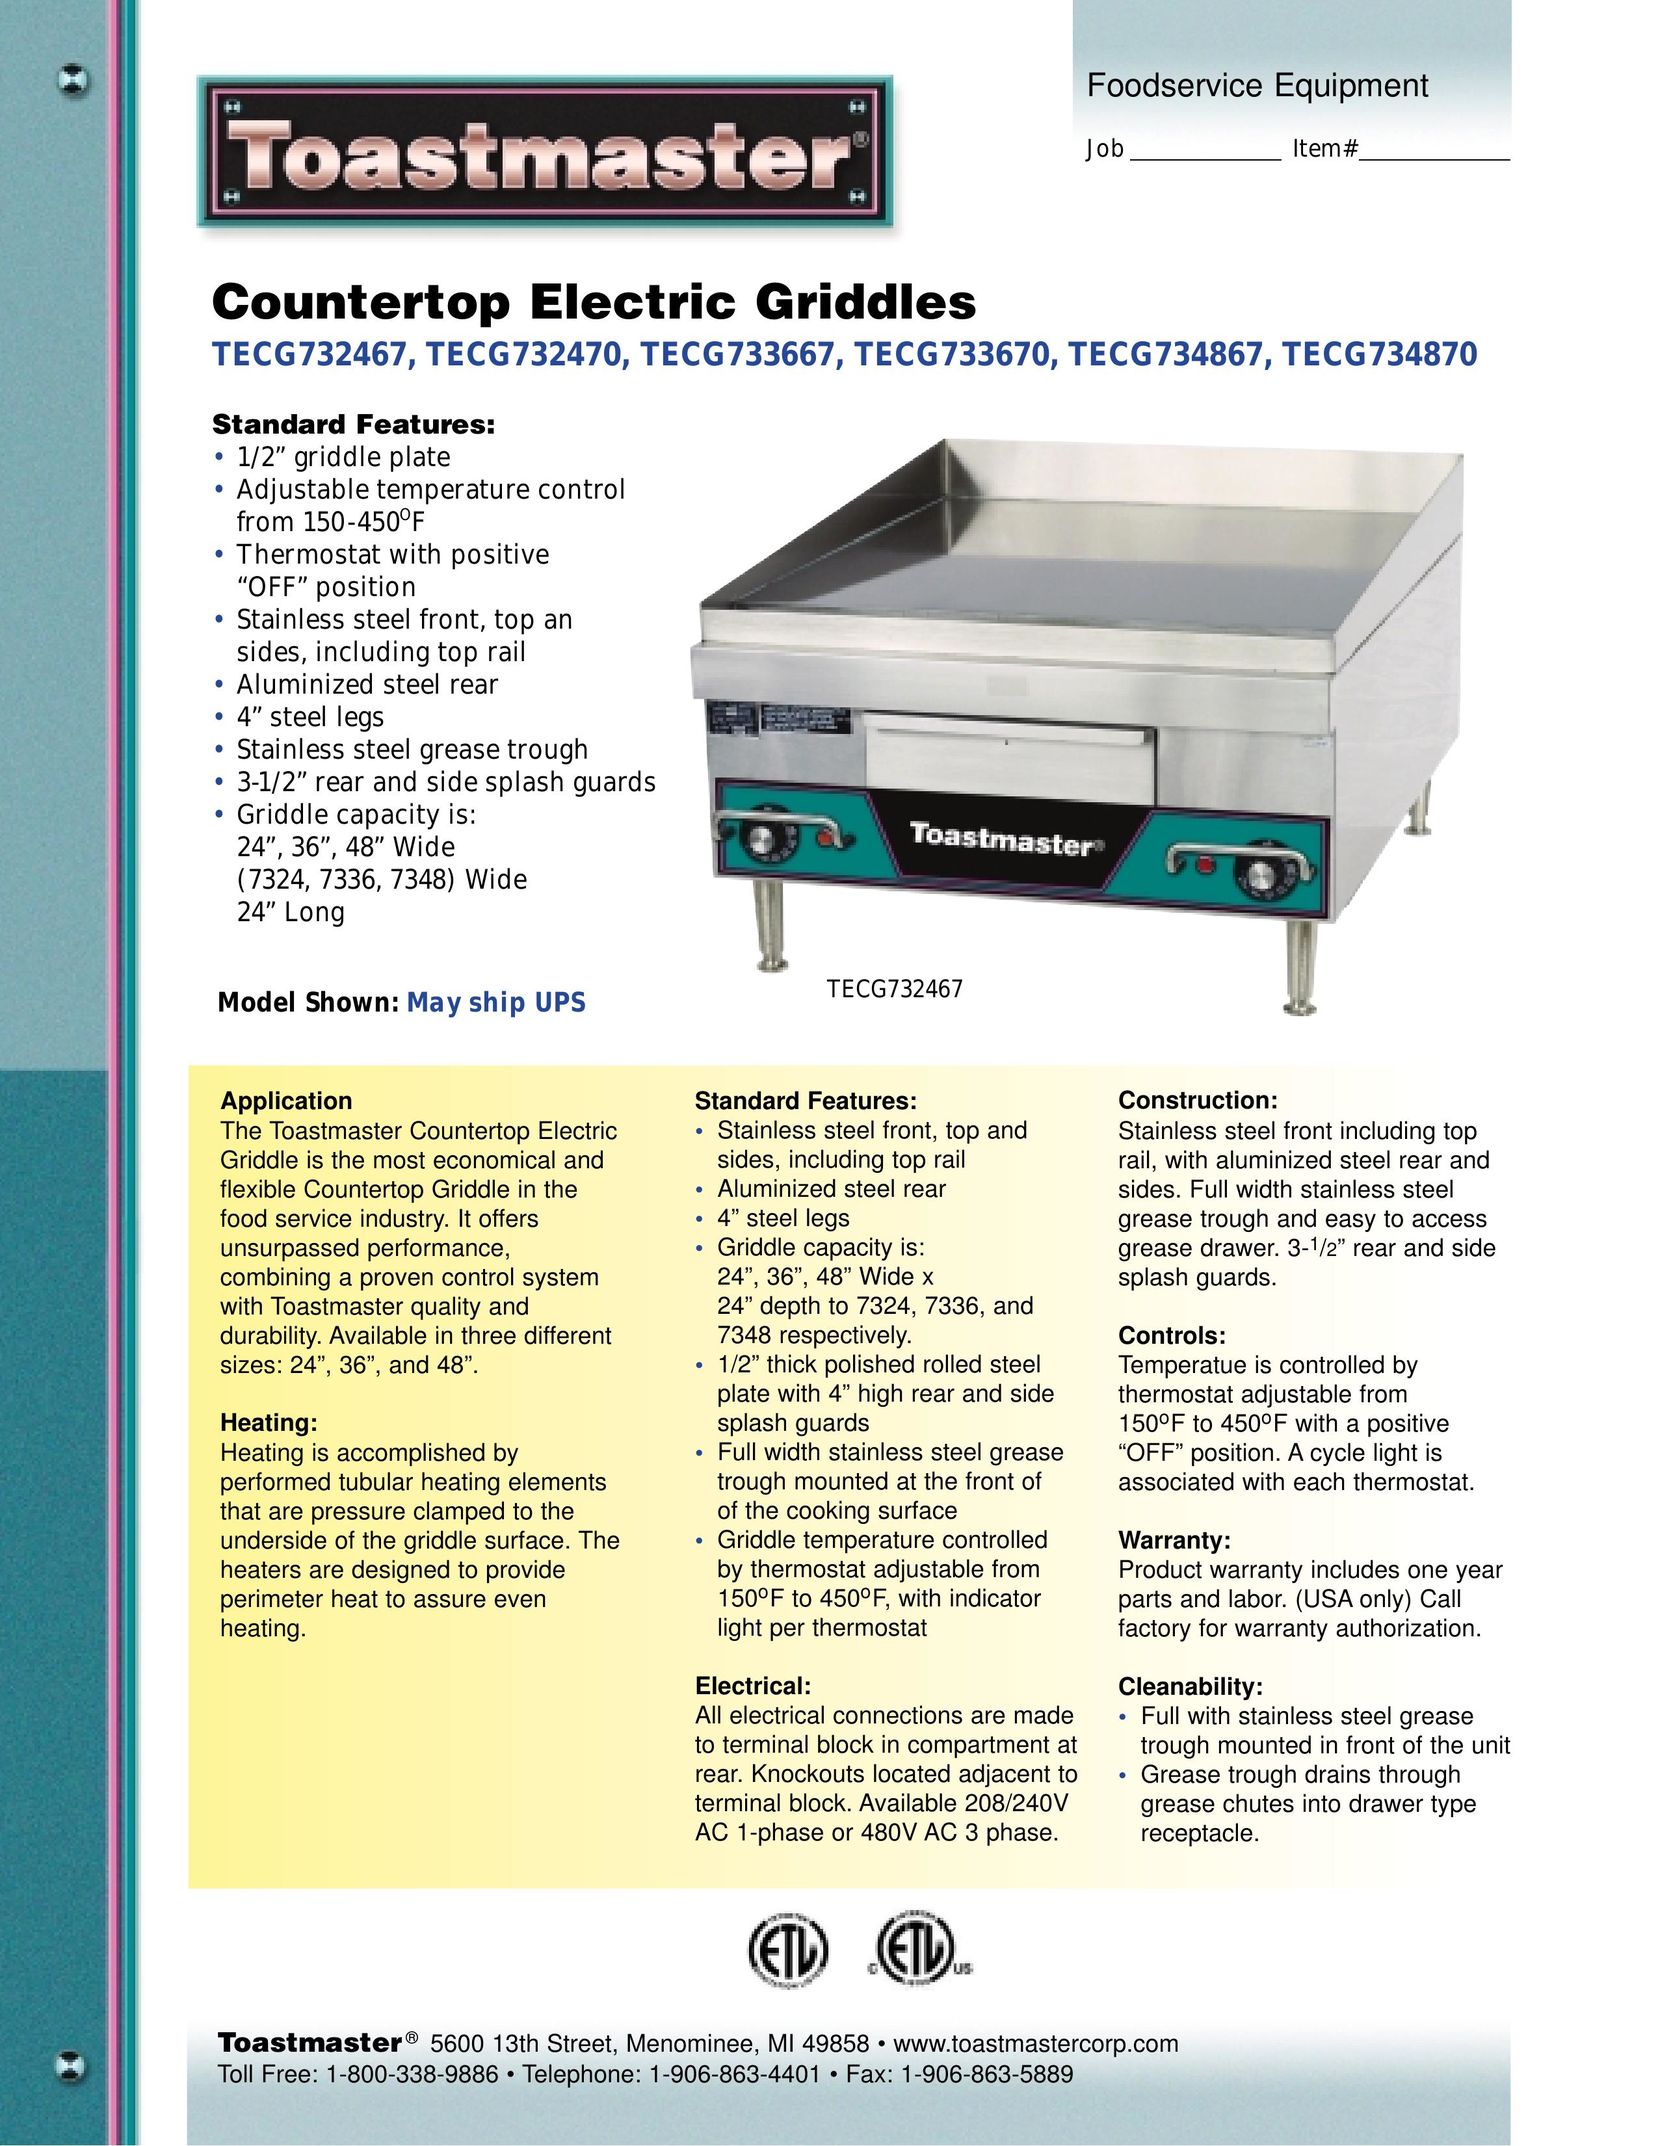 Toastmaster TECG733667 Griddle User Manual